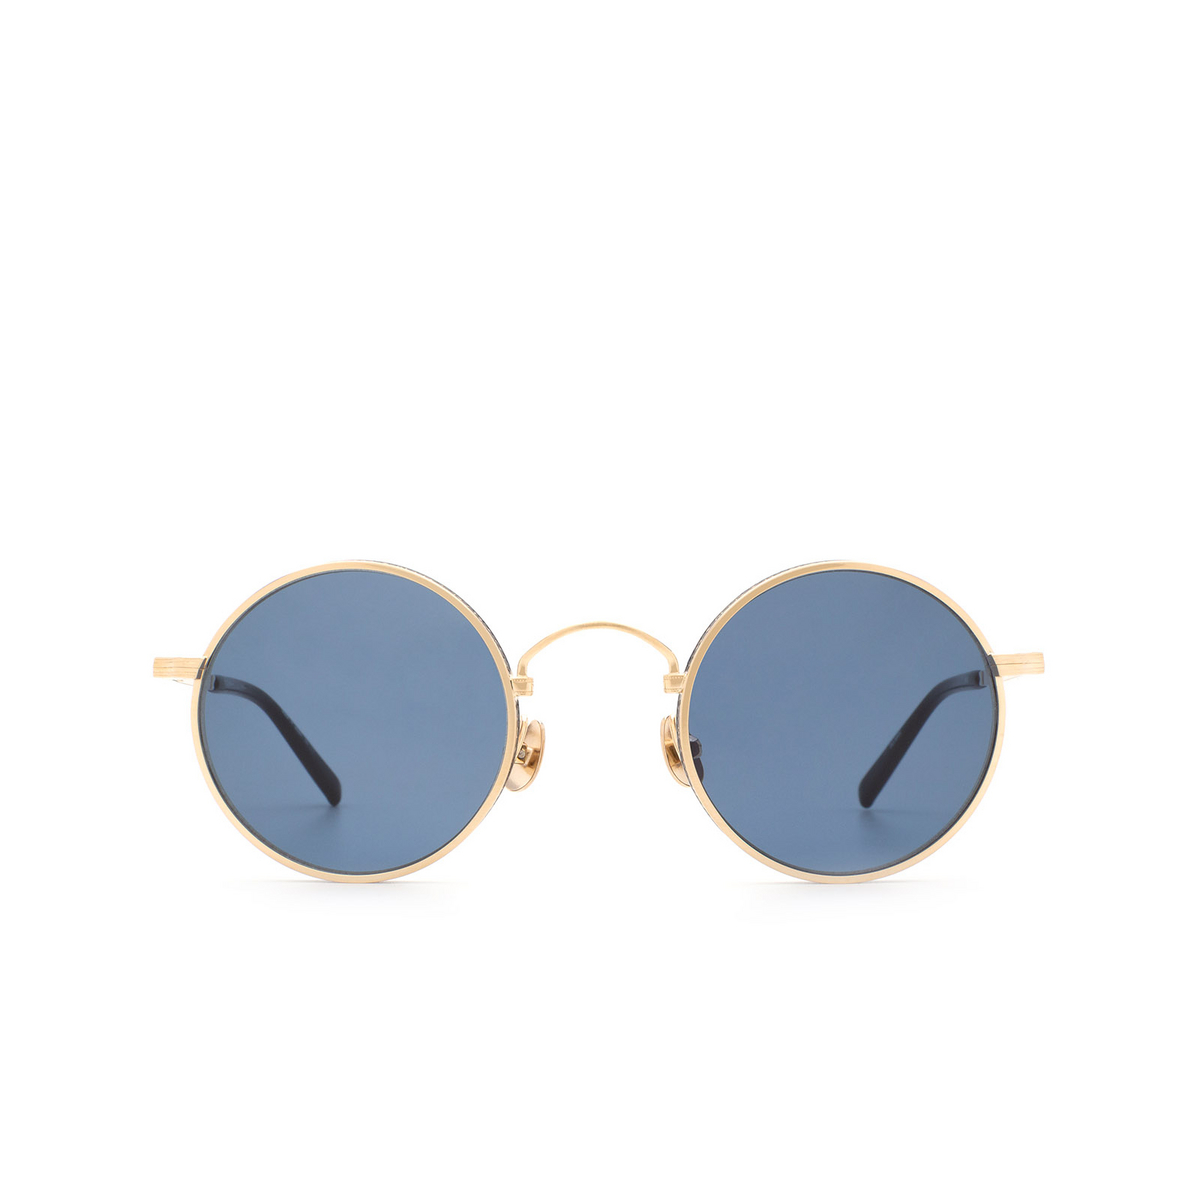 Matsuda® Round Sunglasses: M3100 color Brushed Gold / Matte Black Bg-mbk - front view.